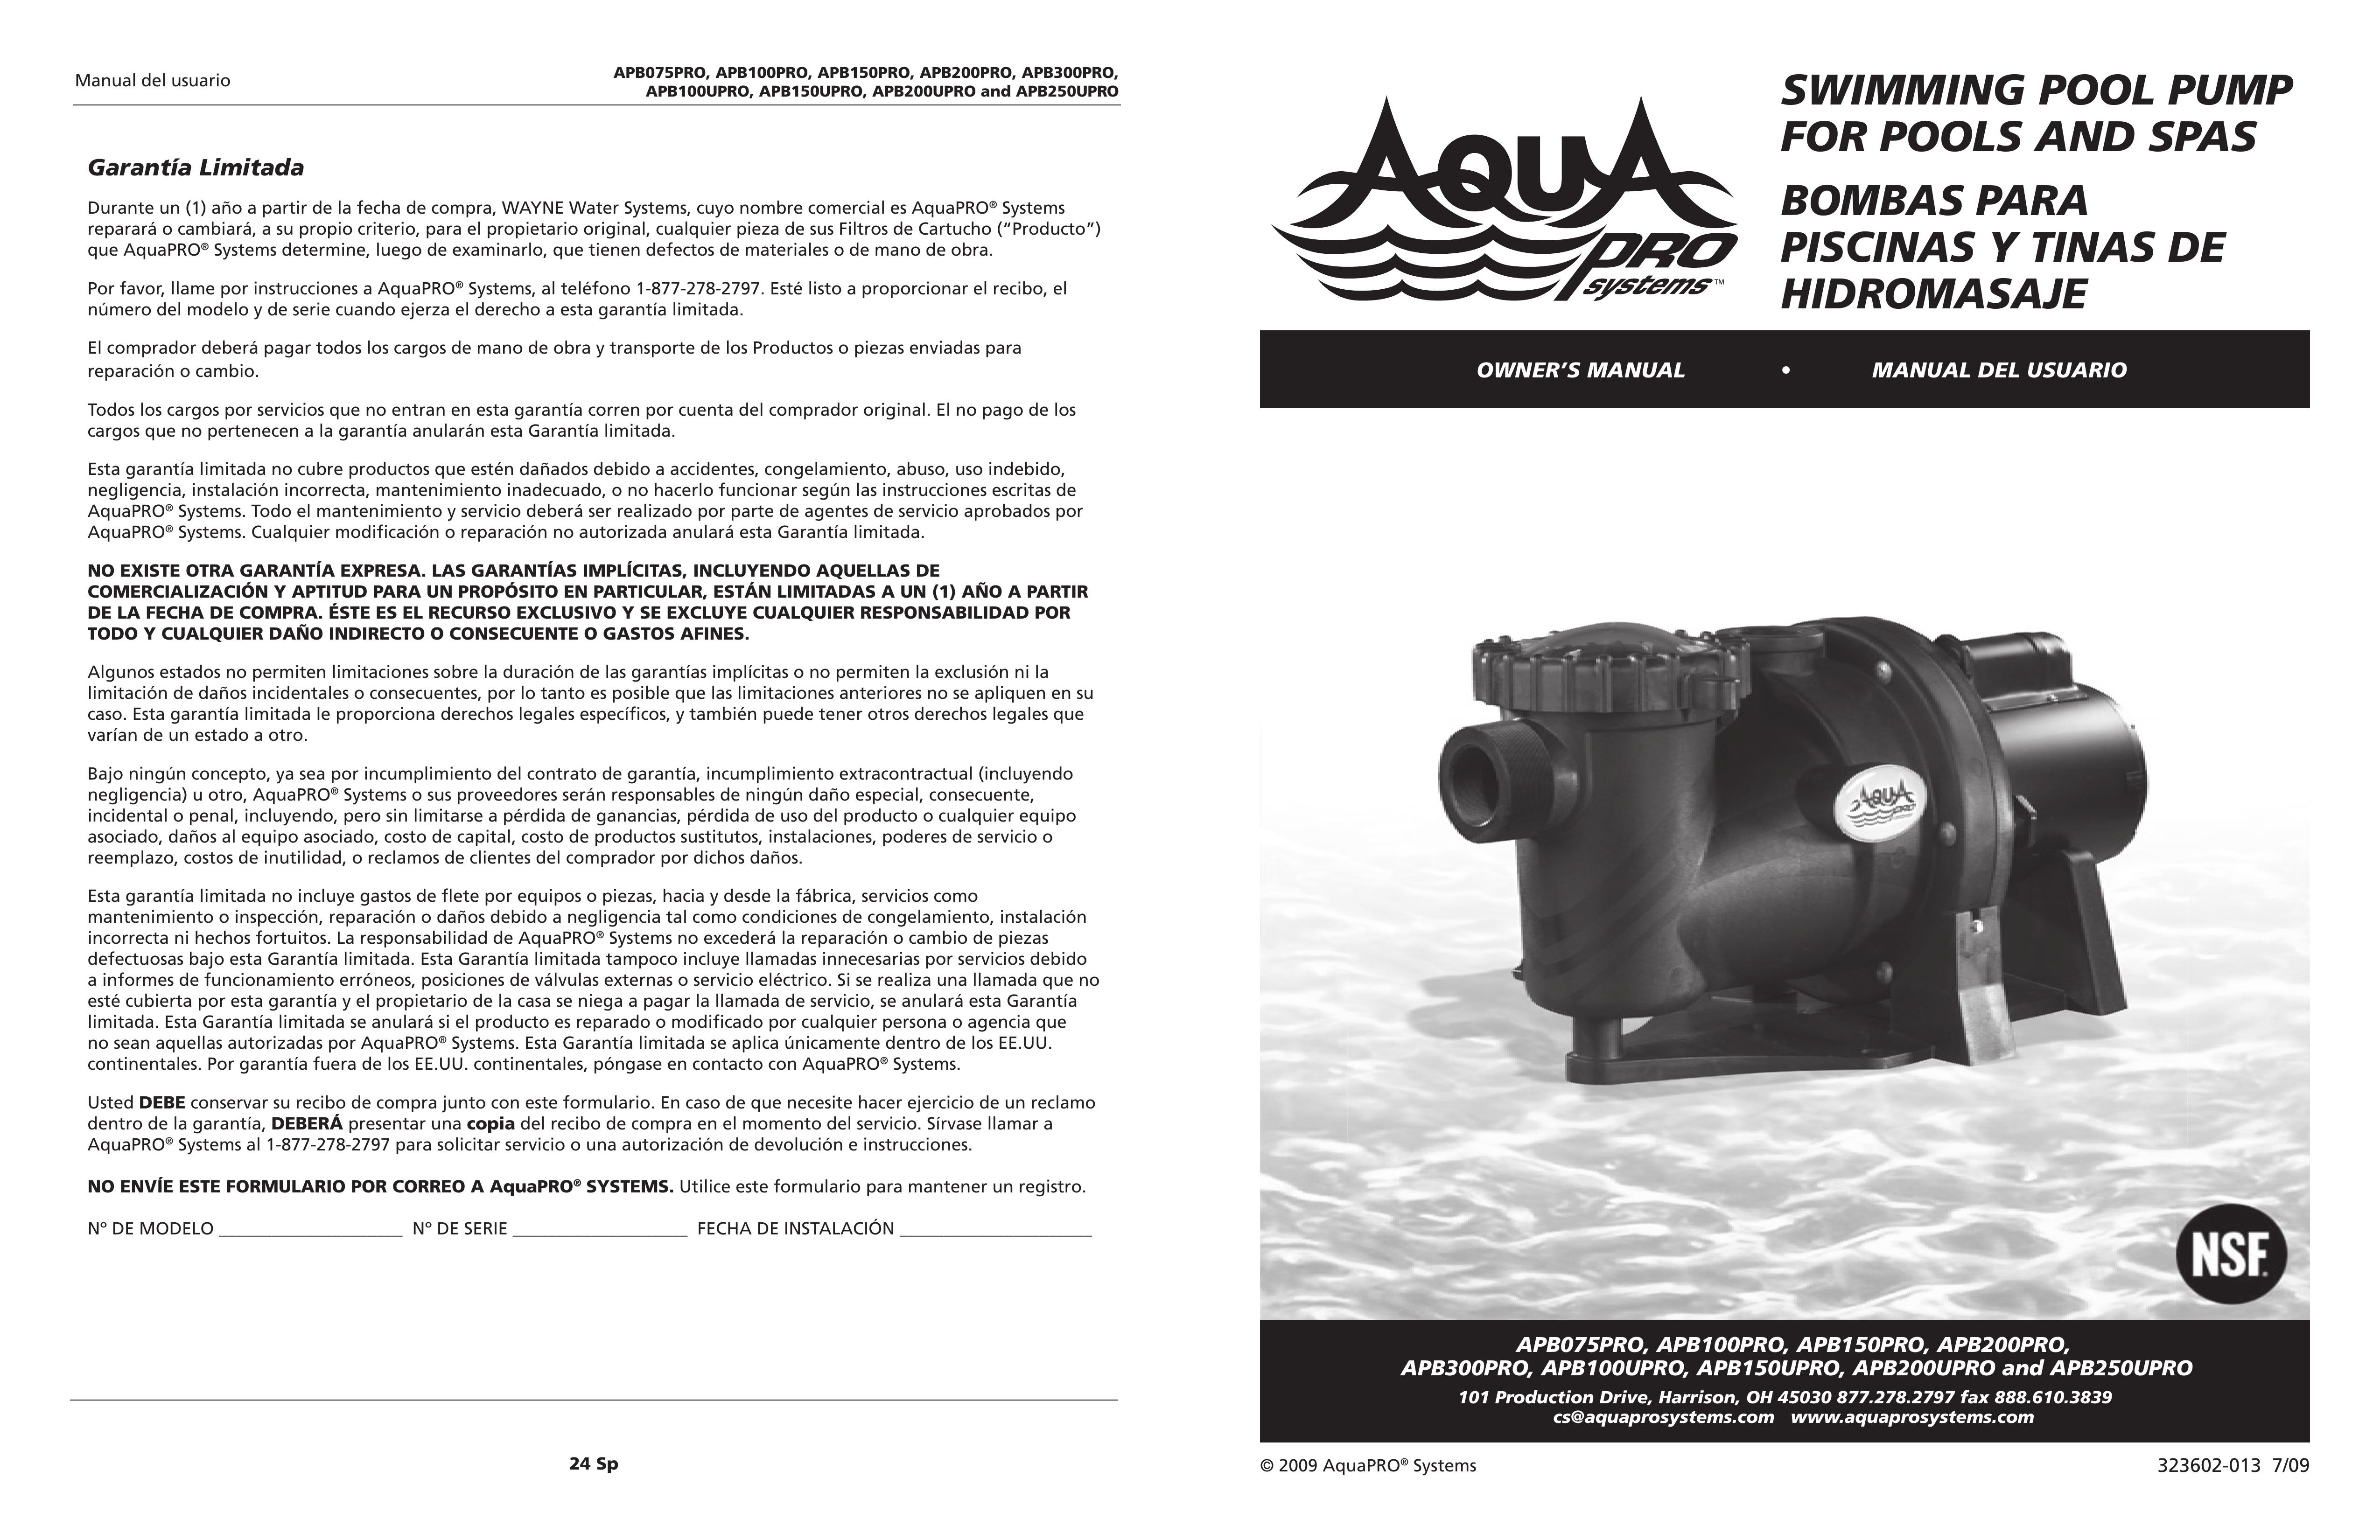 AquaPRO APB100PRO Swimming Pool Pump User Manual